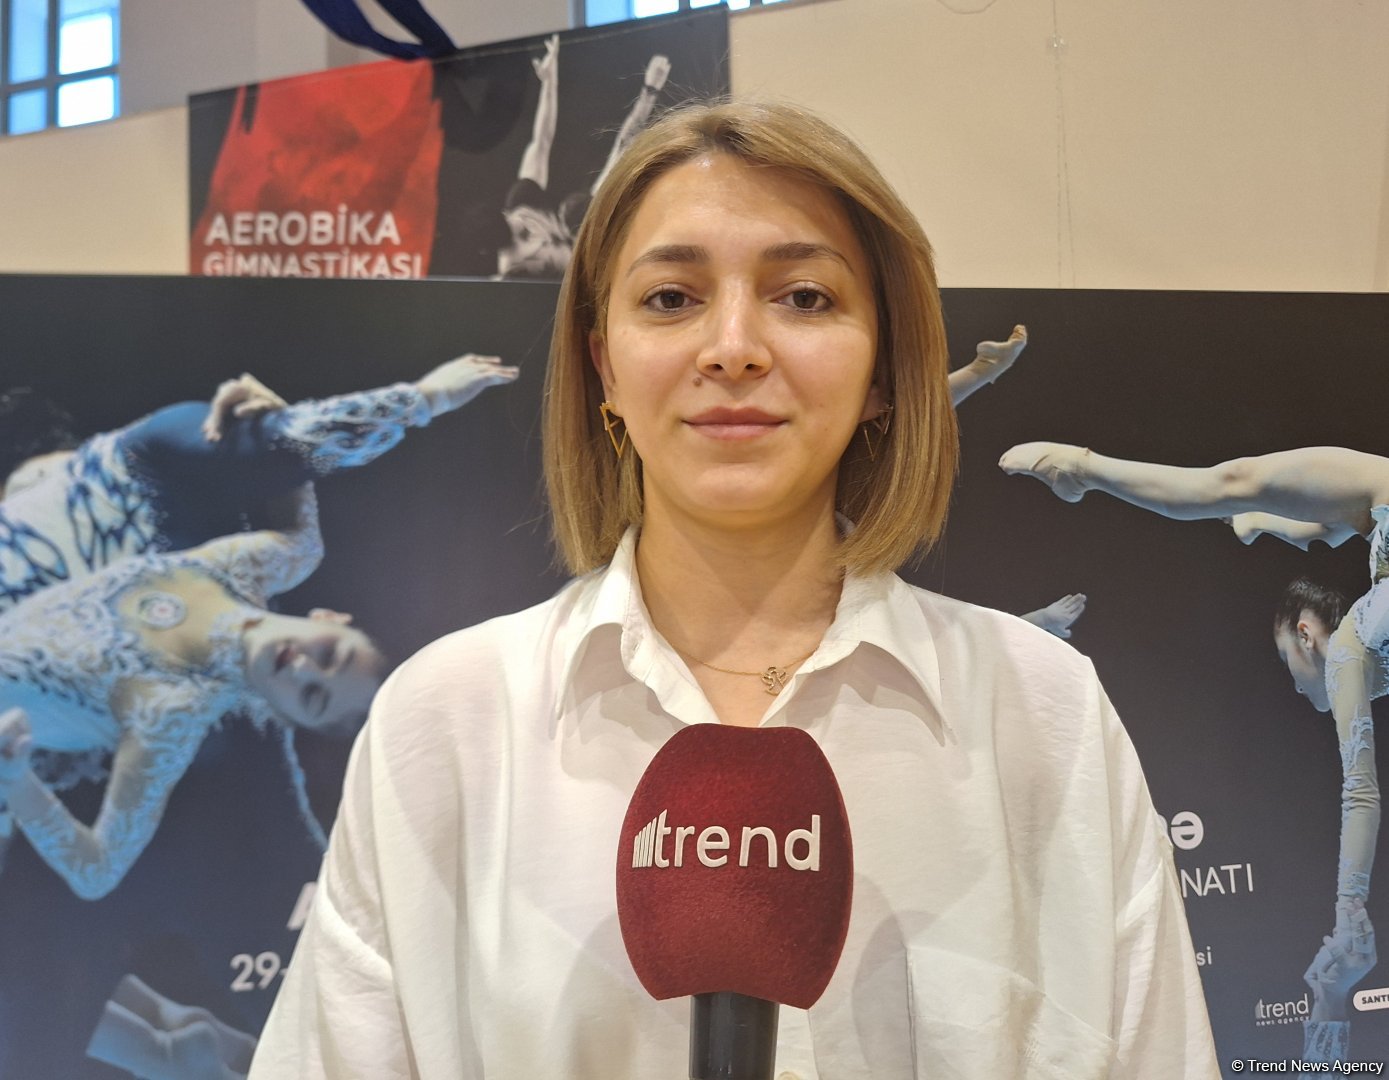 Azerbaijani national acrobatic gymnastics team members show high achievements - coach